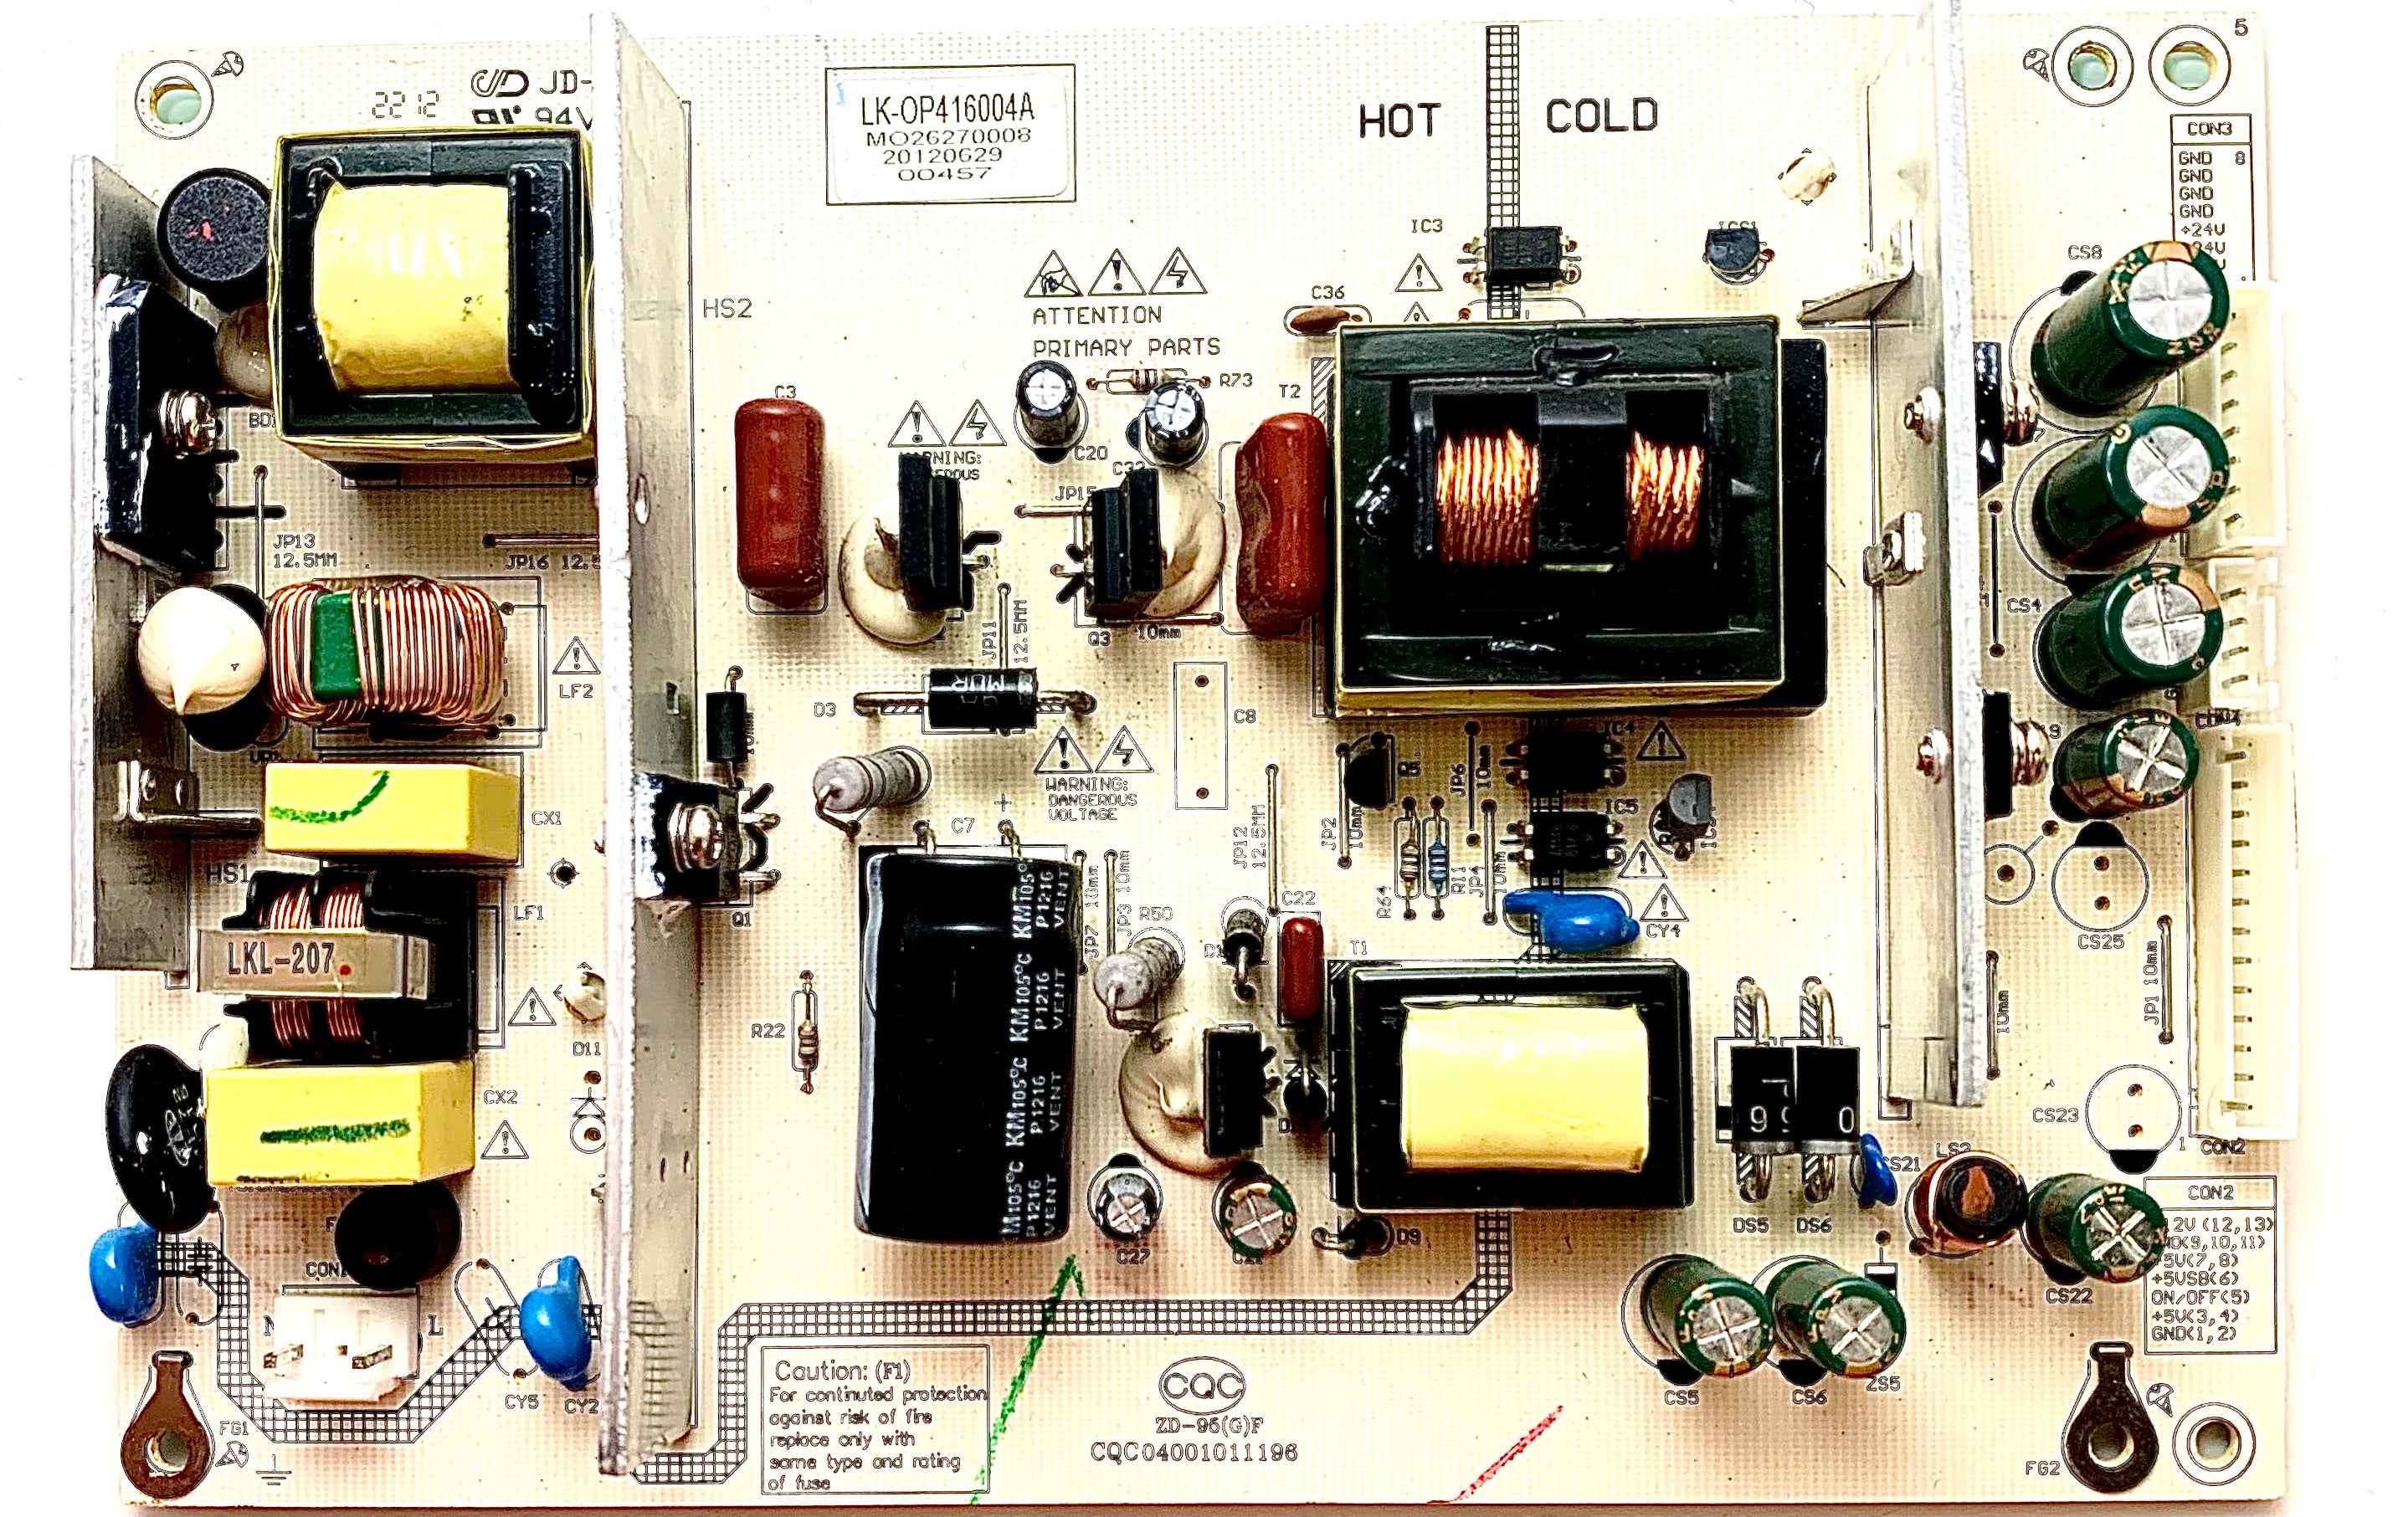 Westinghouse LK-OP416004A (CQC04001011196) Power Supply Unit